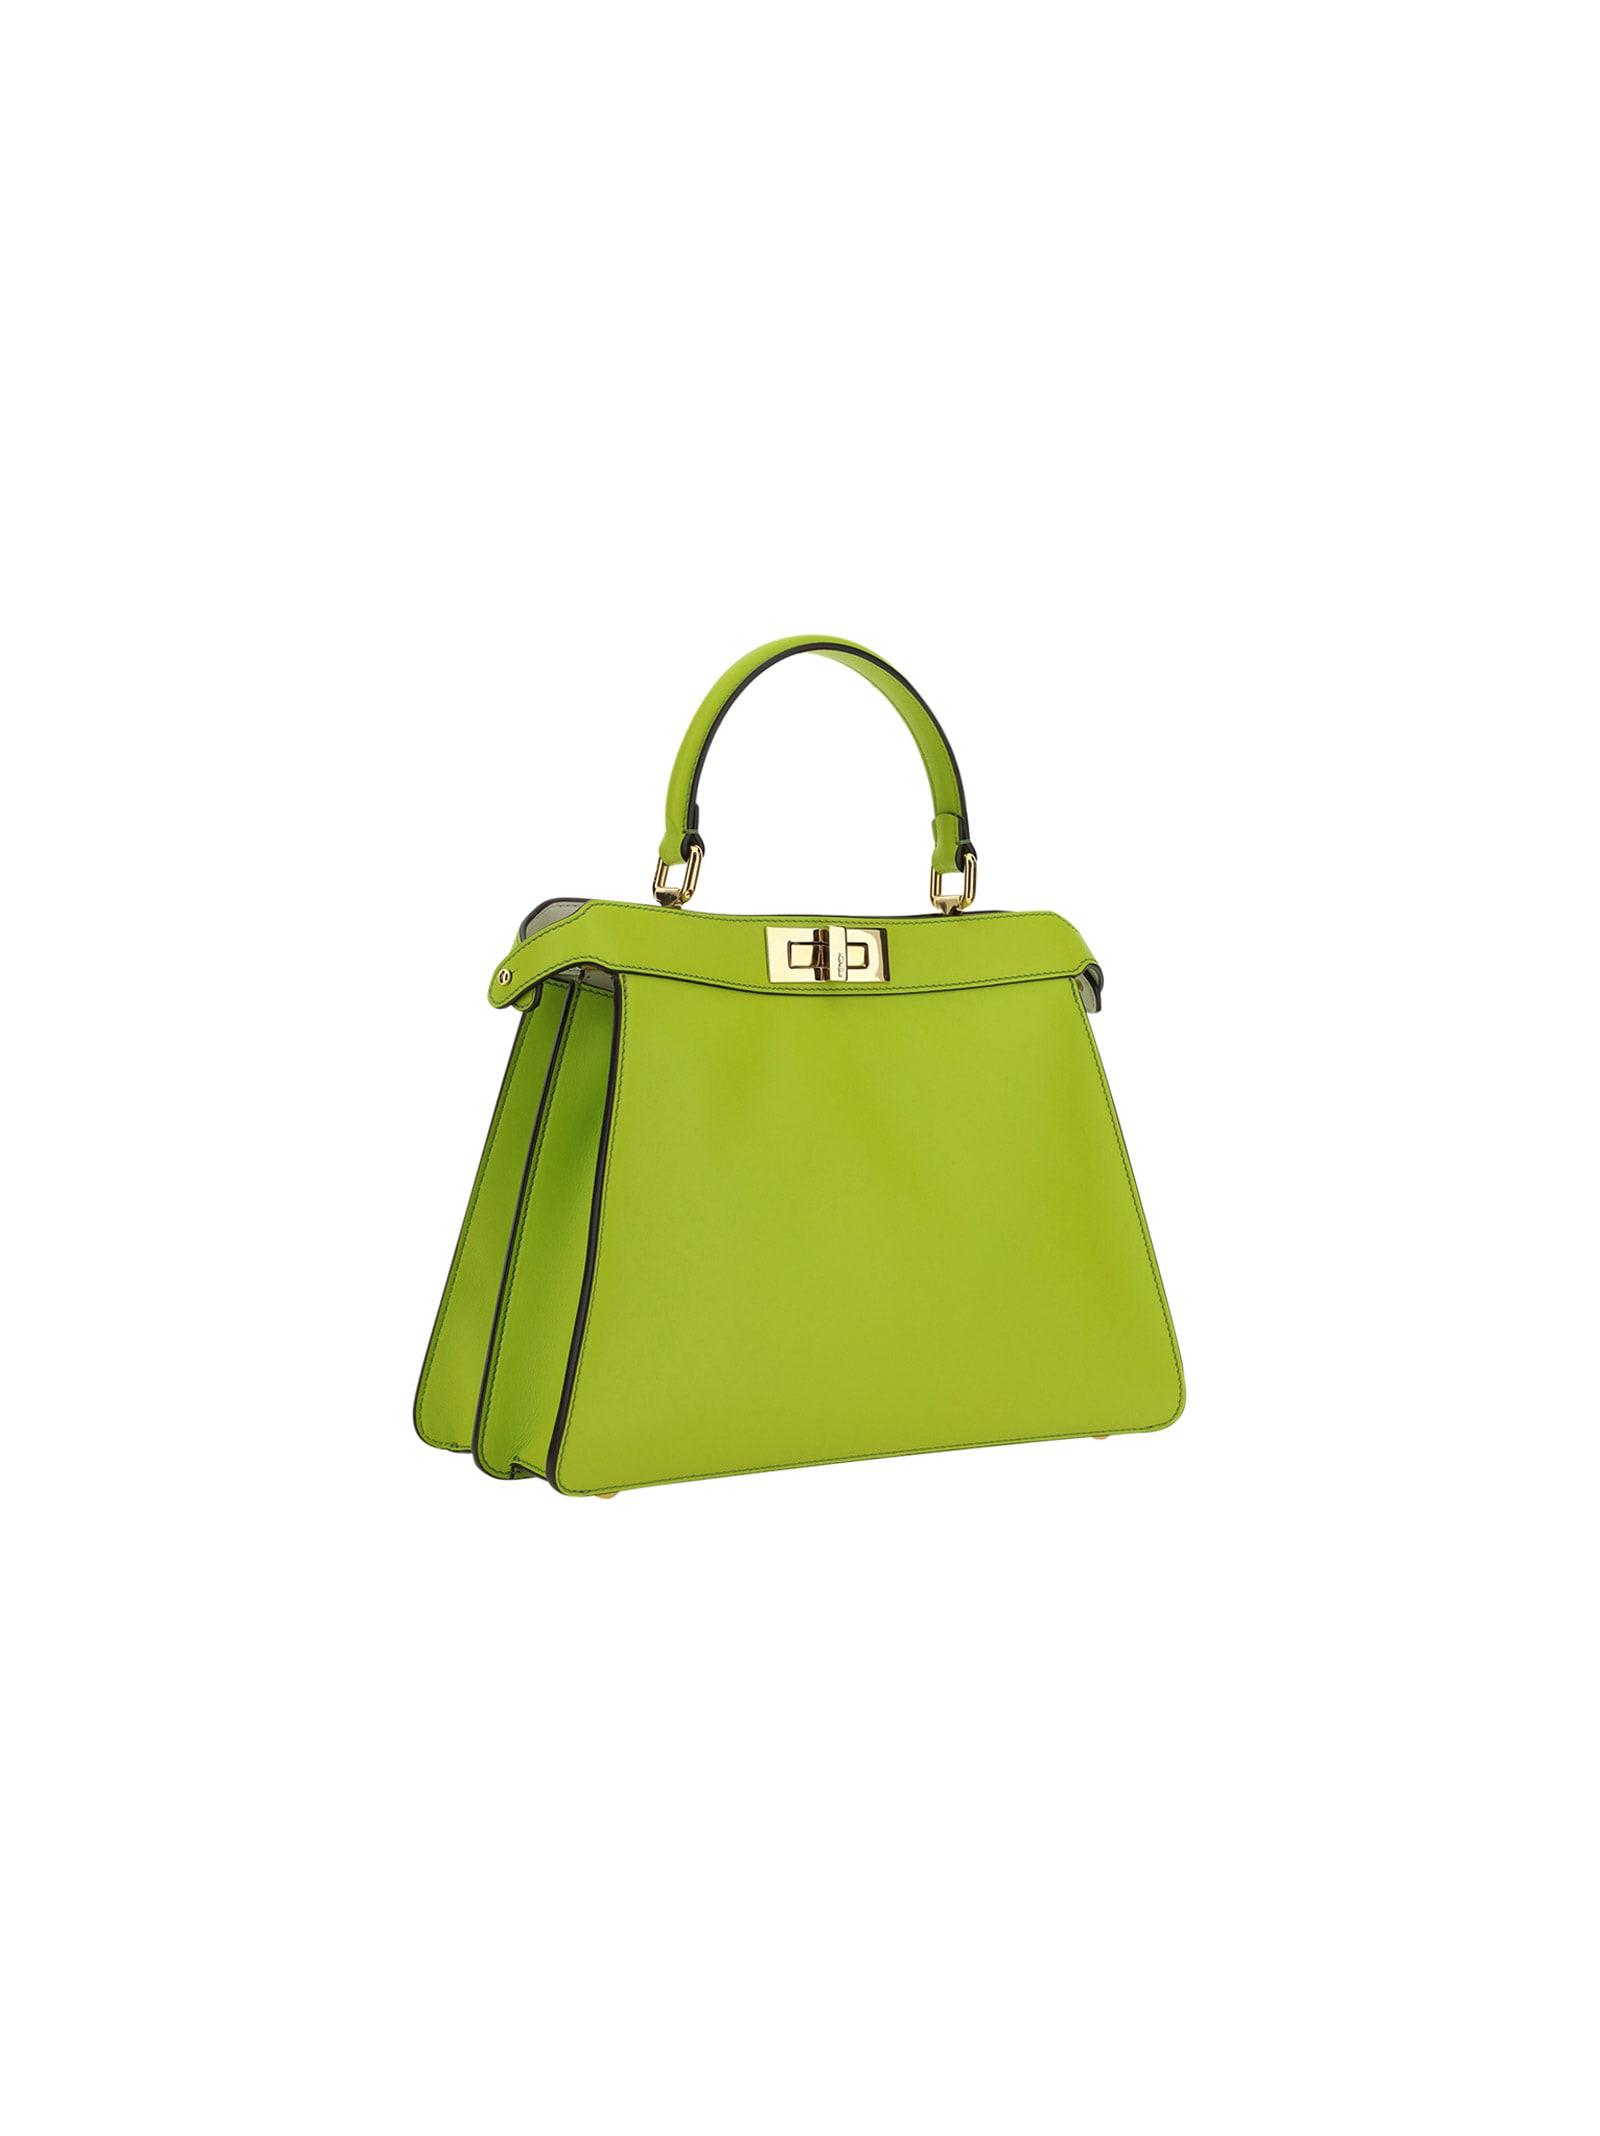 Fendi Peekaboo Bag in Green | Lyst